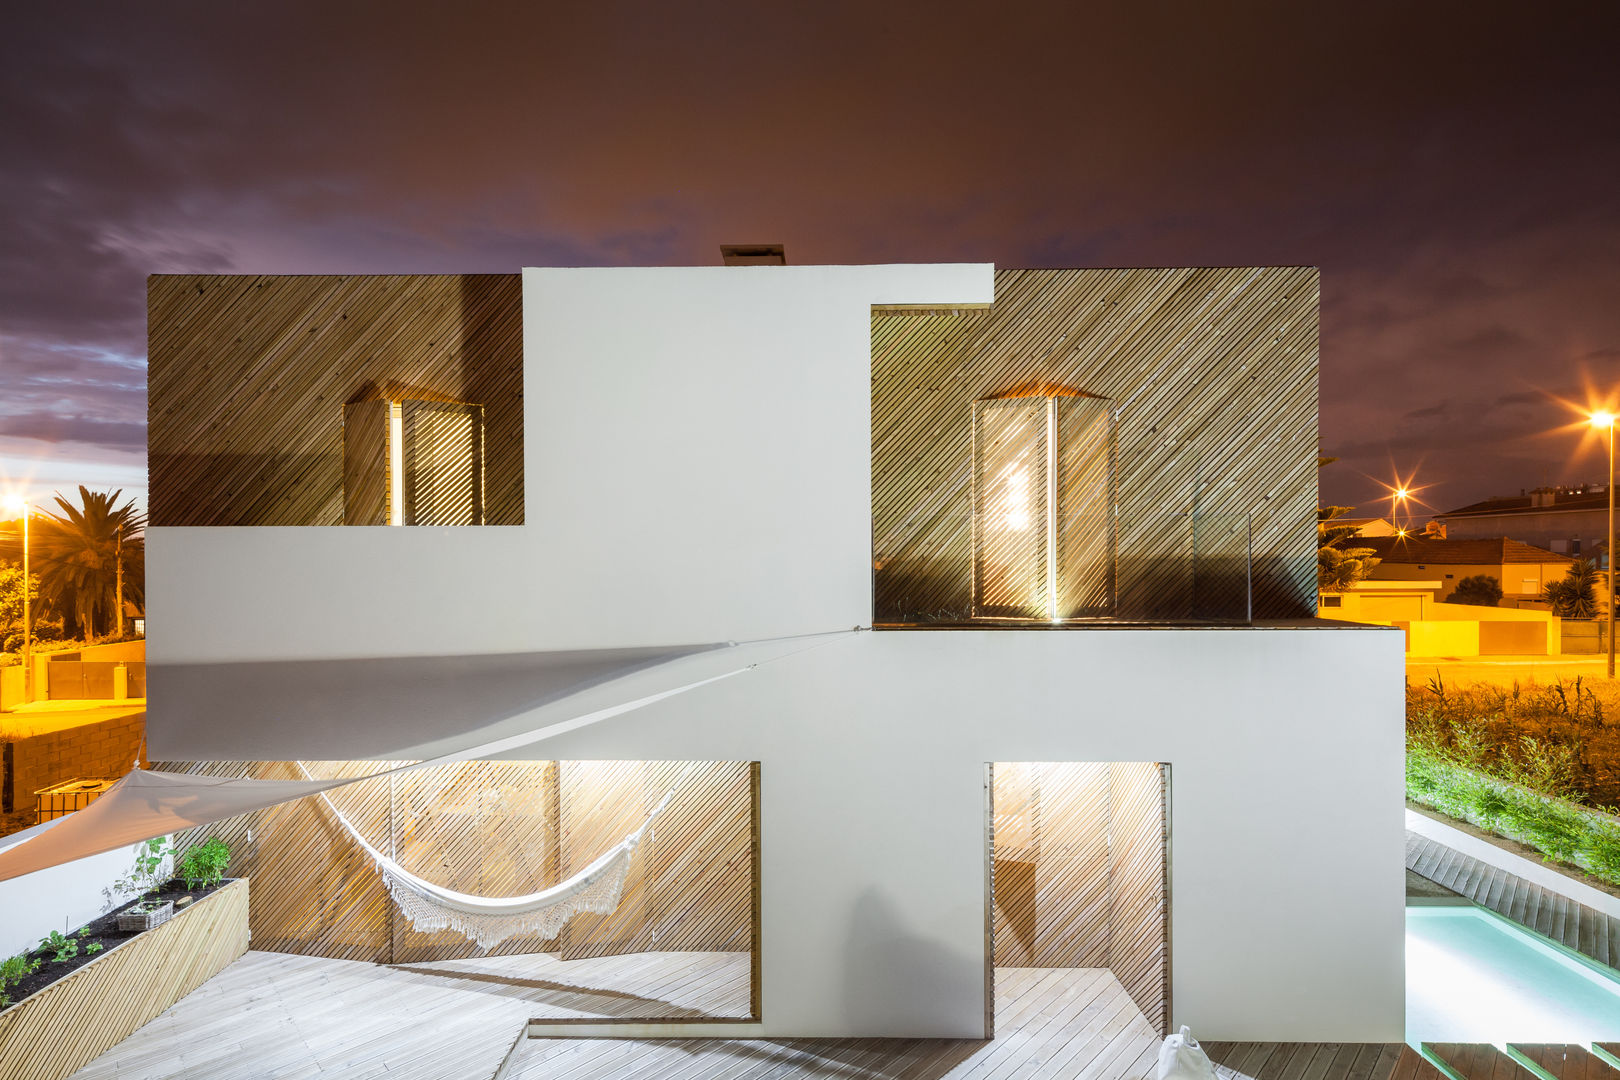 SilverWoodHouse, Joao Morgado - Architectural Photography Joao Morgado - Architectural Photography Casas modernas